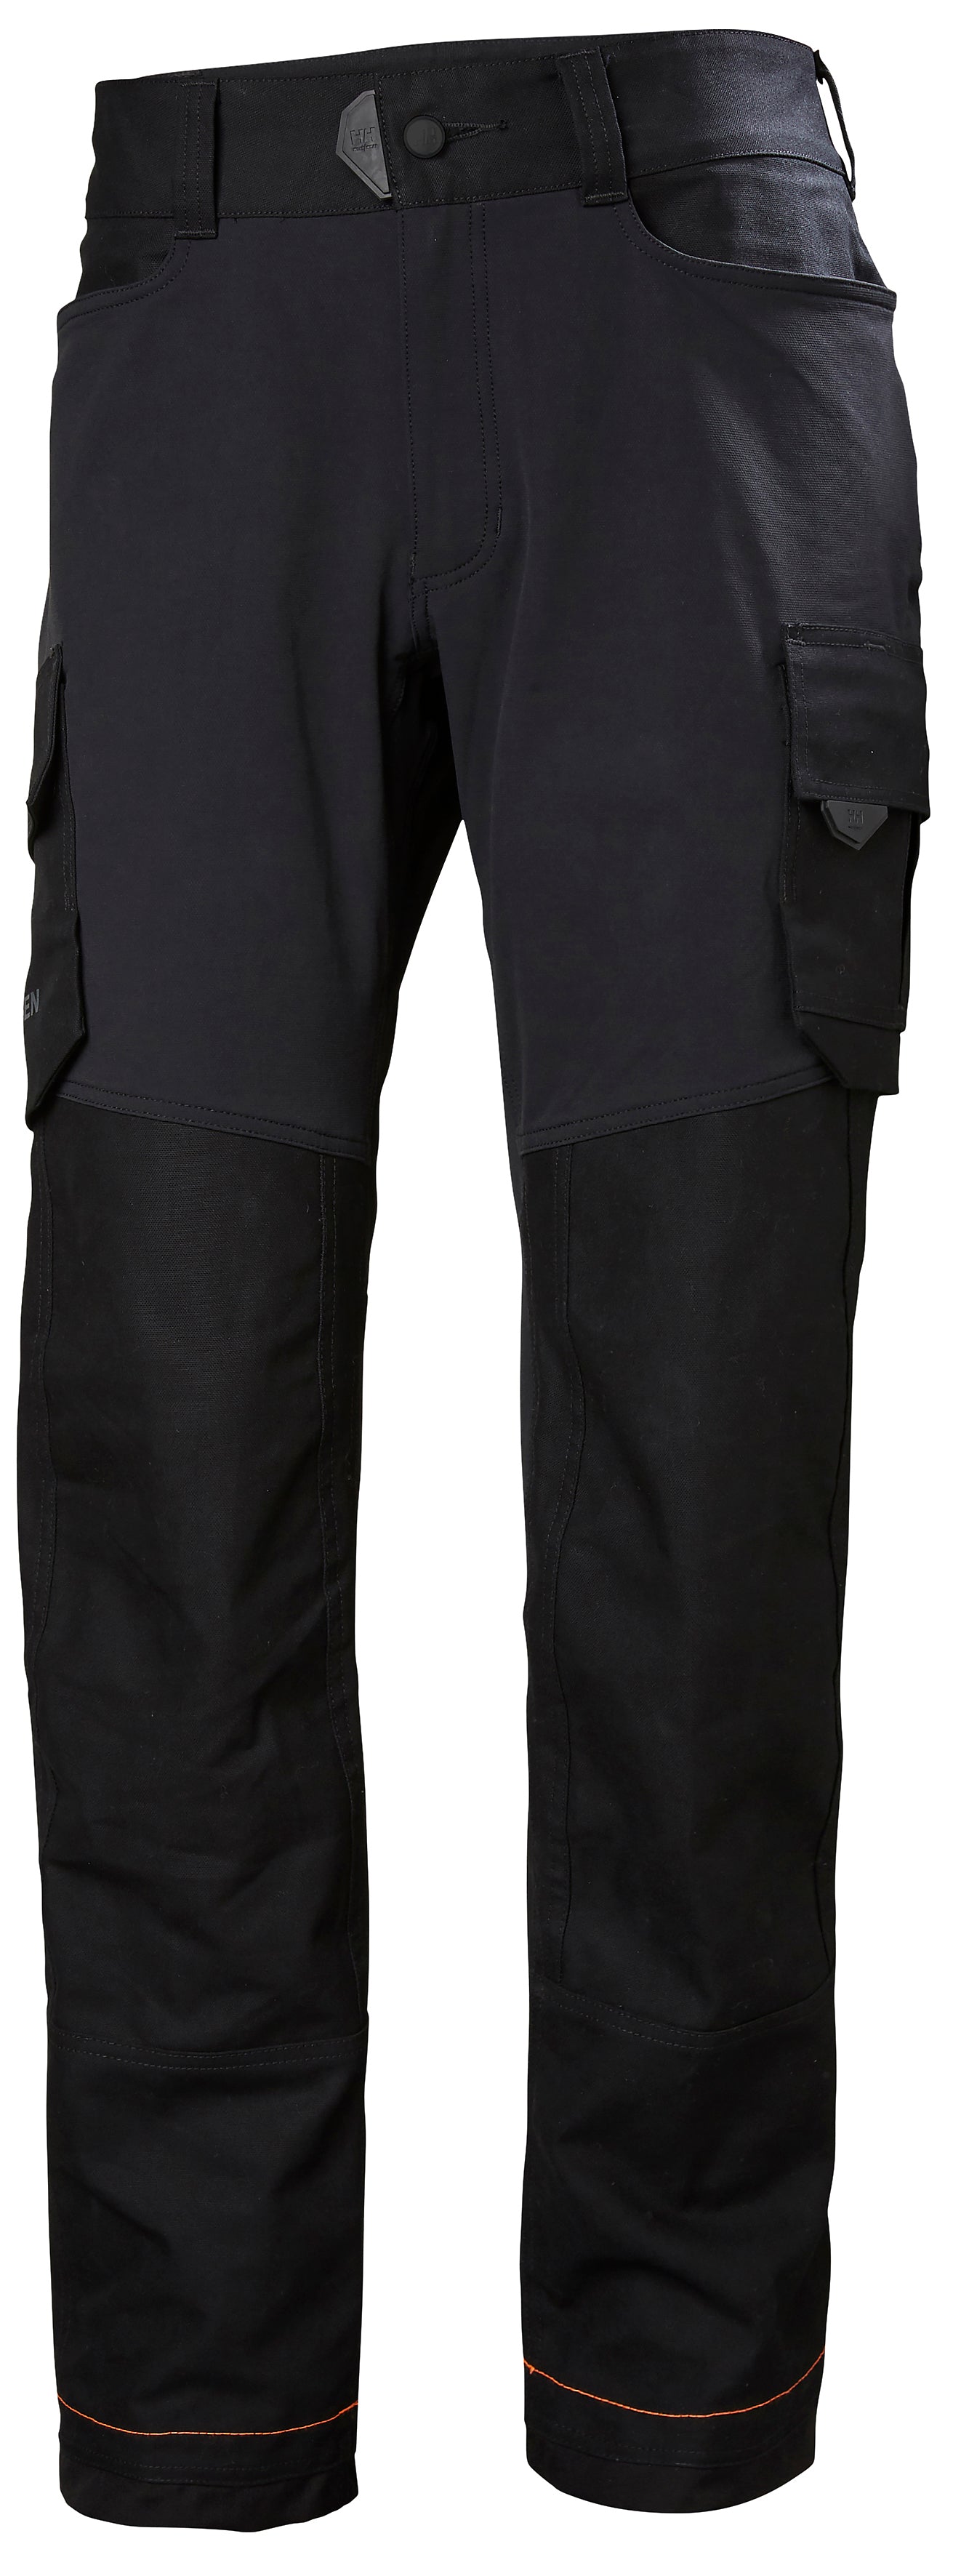 Helly Hansen Chelsea Evo Service Trousers - Black